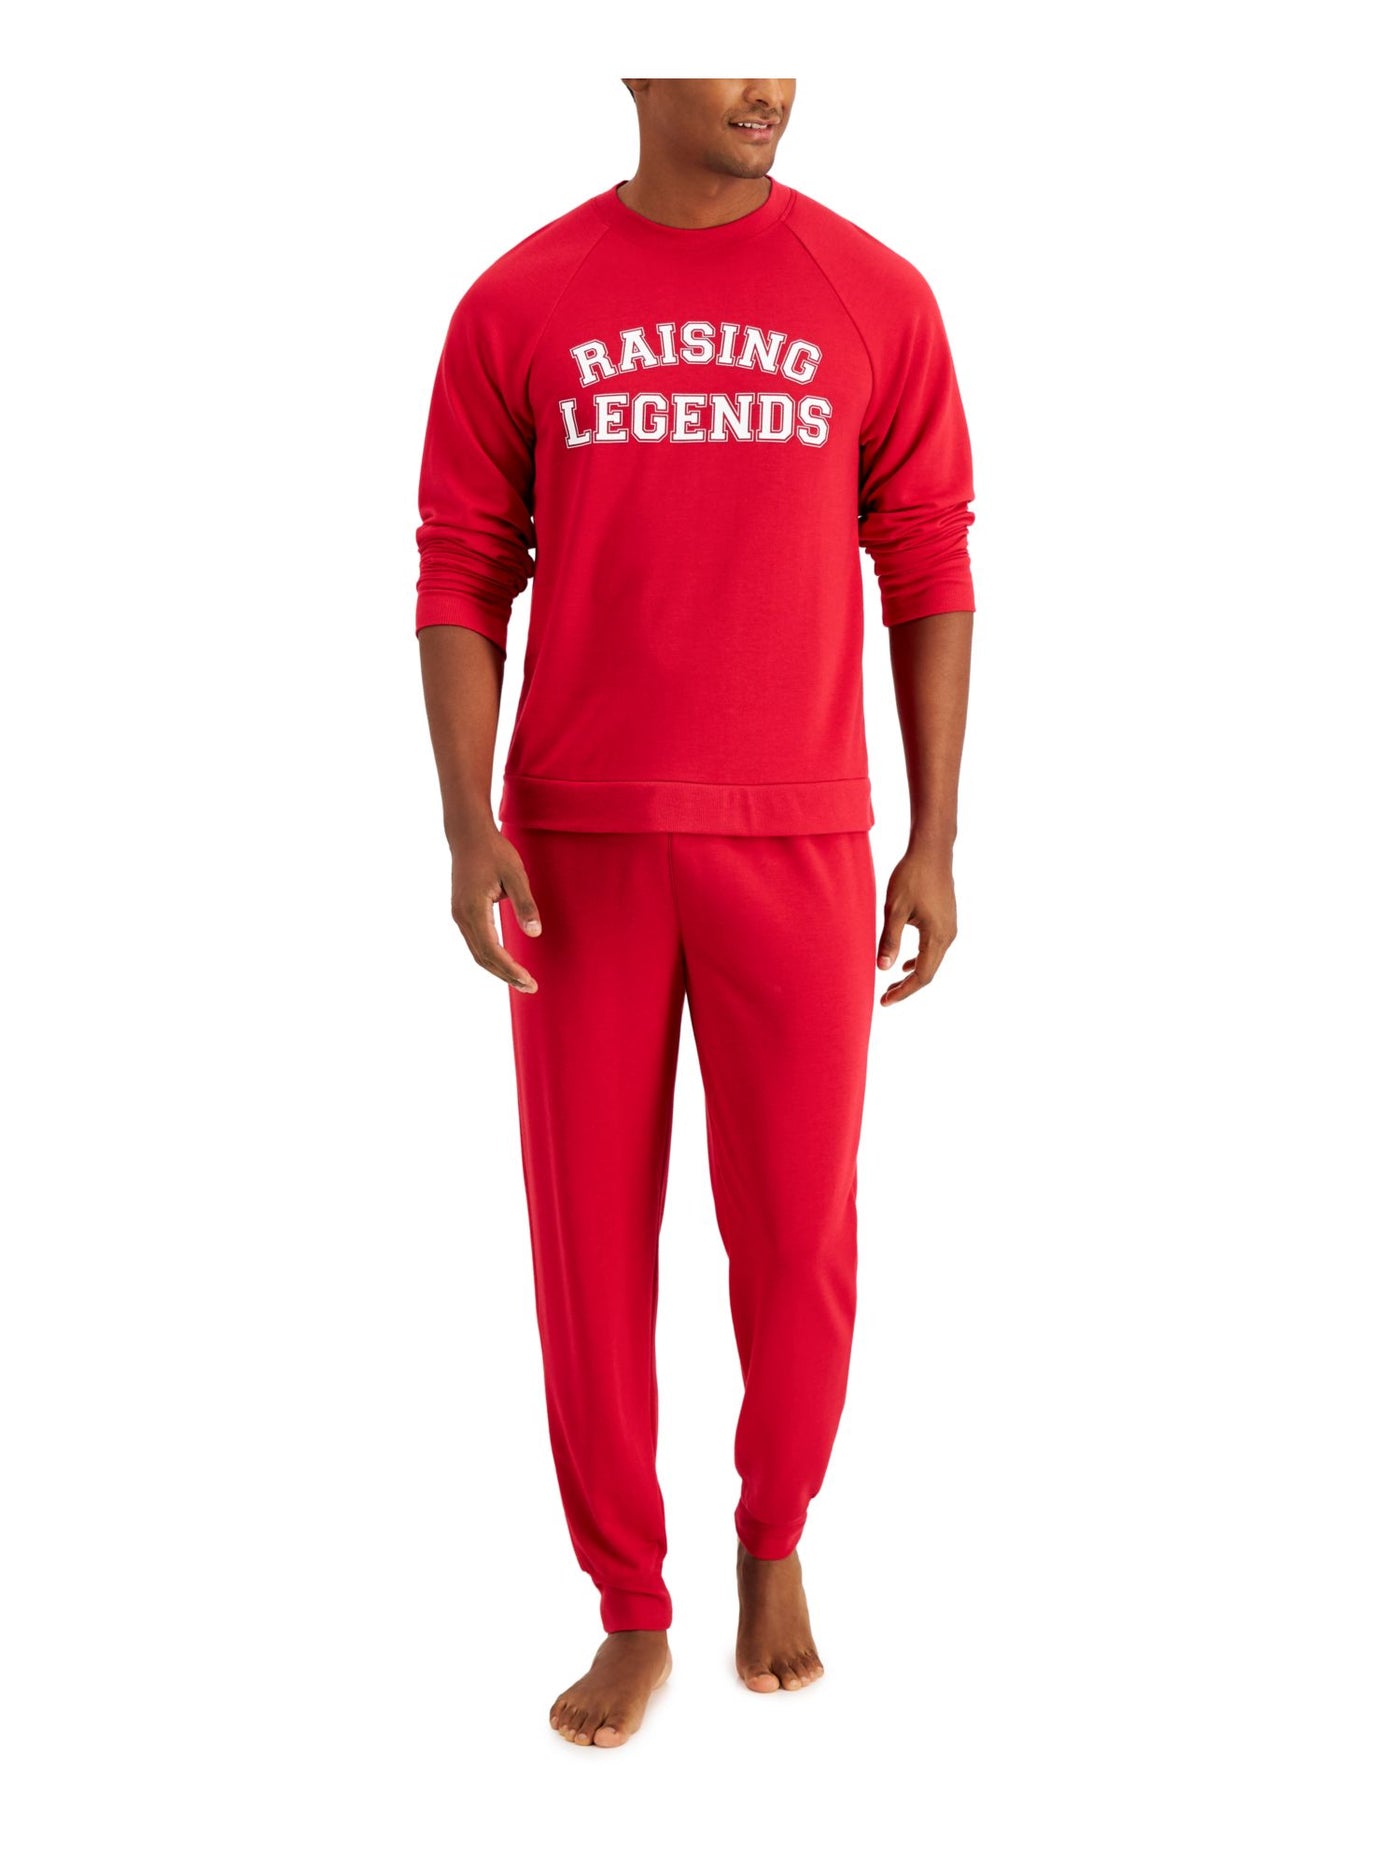 FAMILY PJs Mens Red Printed Top Elastic Band Long Sleeve Lounge Pants Pajamas S